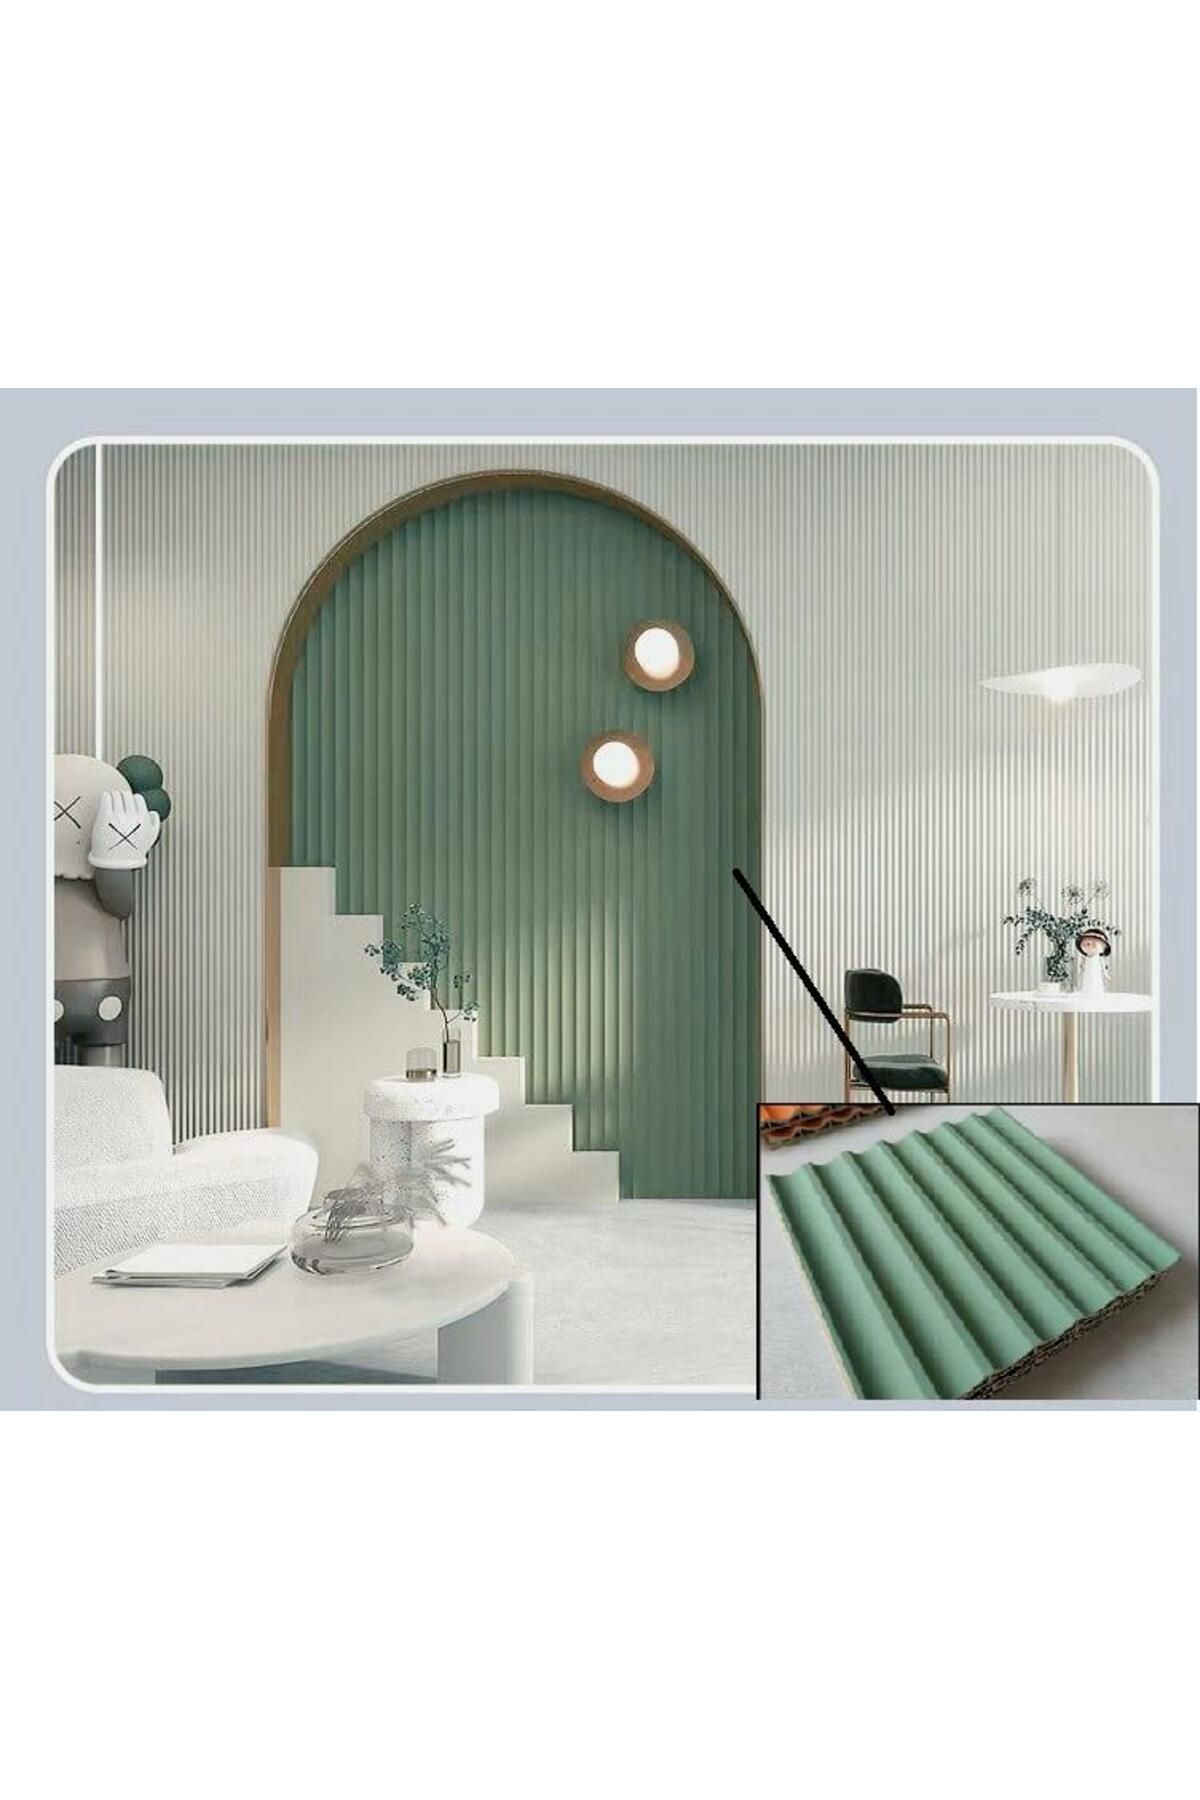 Renkli Duvarlar 20x145cm 1 Adet Atc Mint Green Prefabrik Ofis Konut Dekoratif Pvc Kaplama Lambiri Duvar Paneli